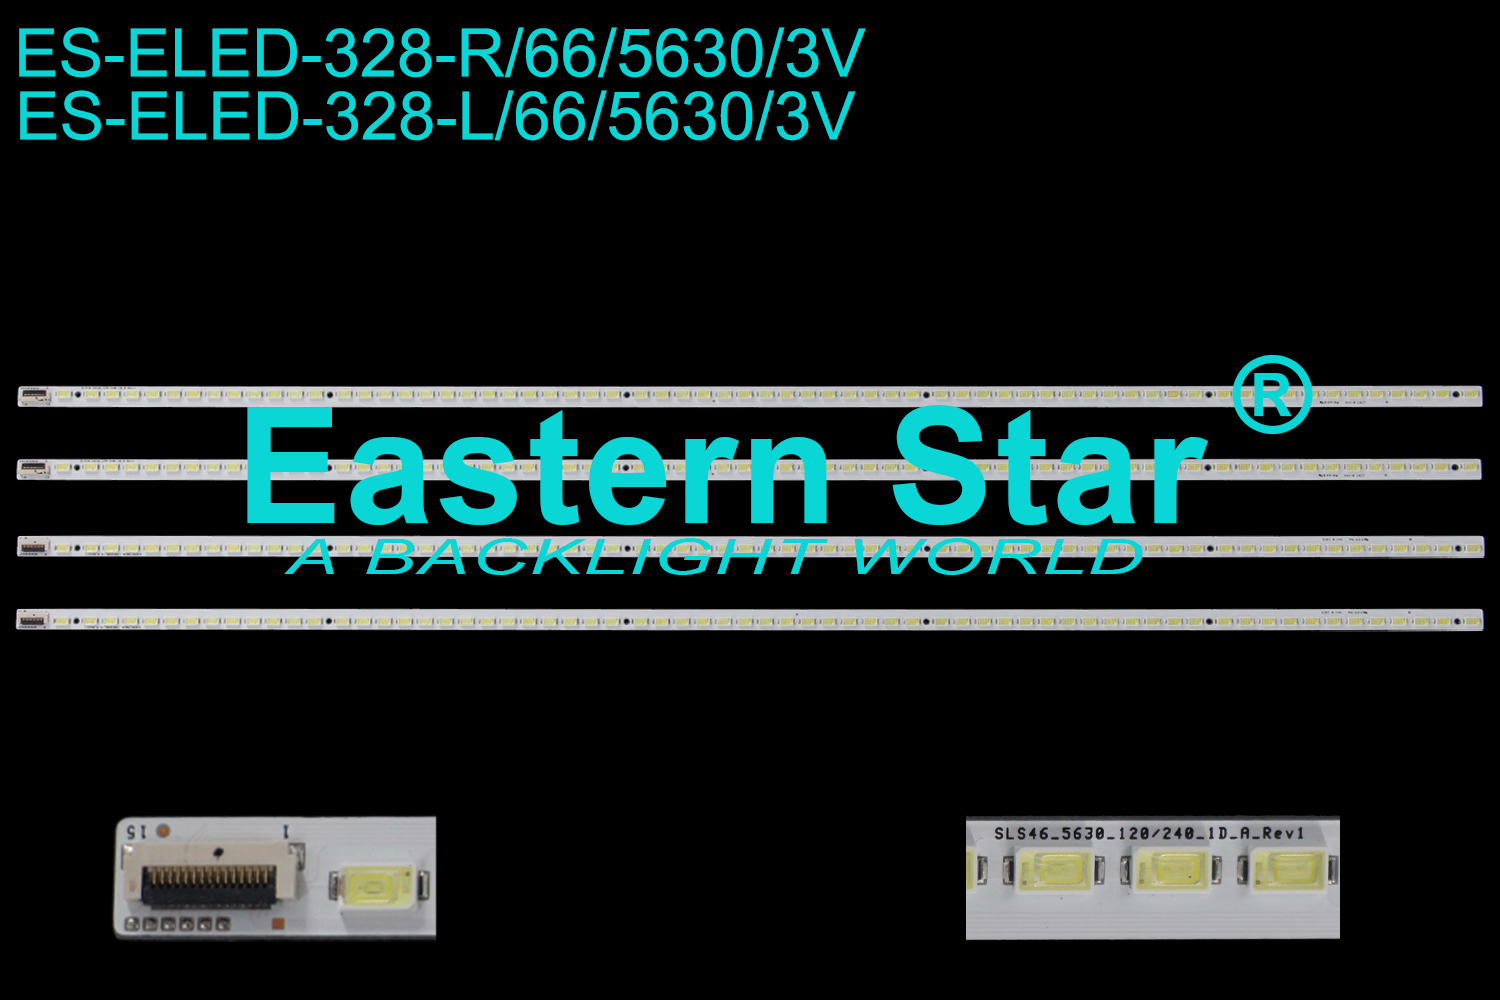 ES-ELED-328 ELED/EDGE TV backlight use for 46'' Sony KDL-46NX810 SLS46 5630 120/240 1D A REV1 sj-SLS46-5630-120/240 LED STRIPS(4)